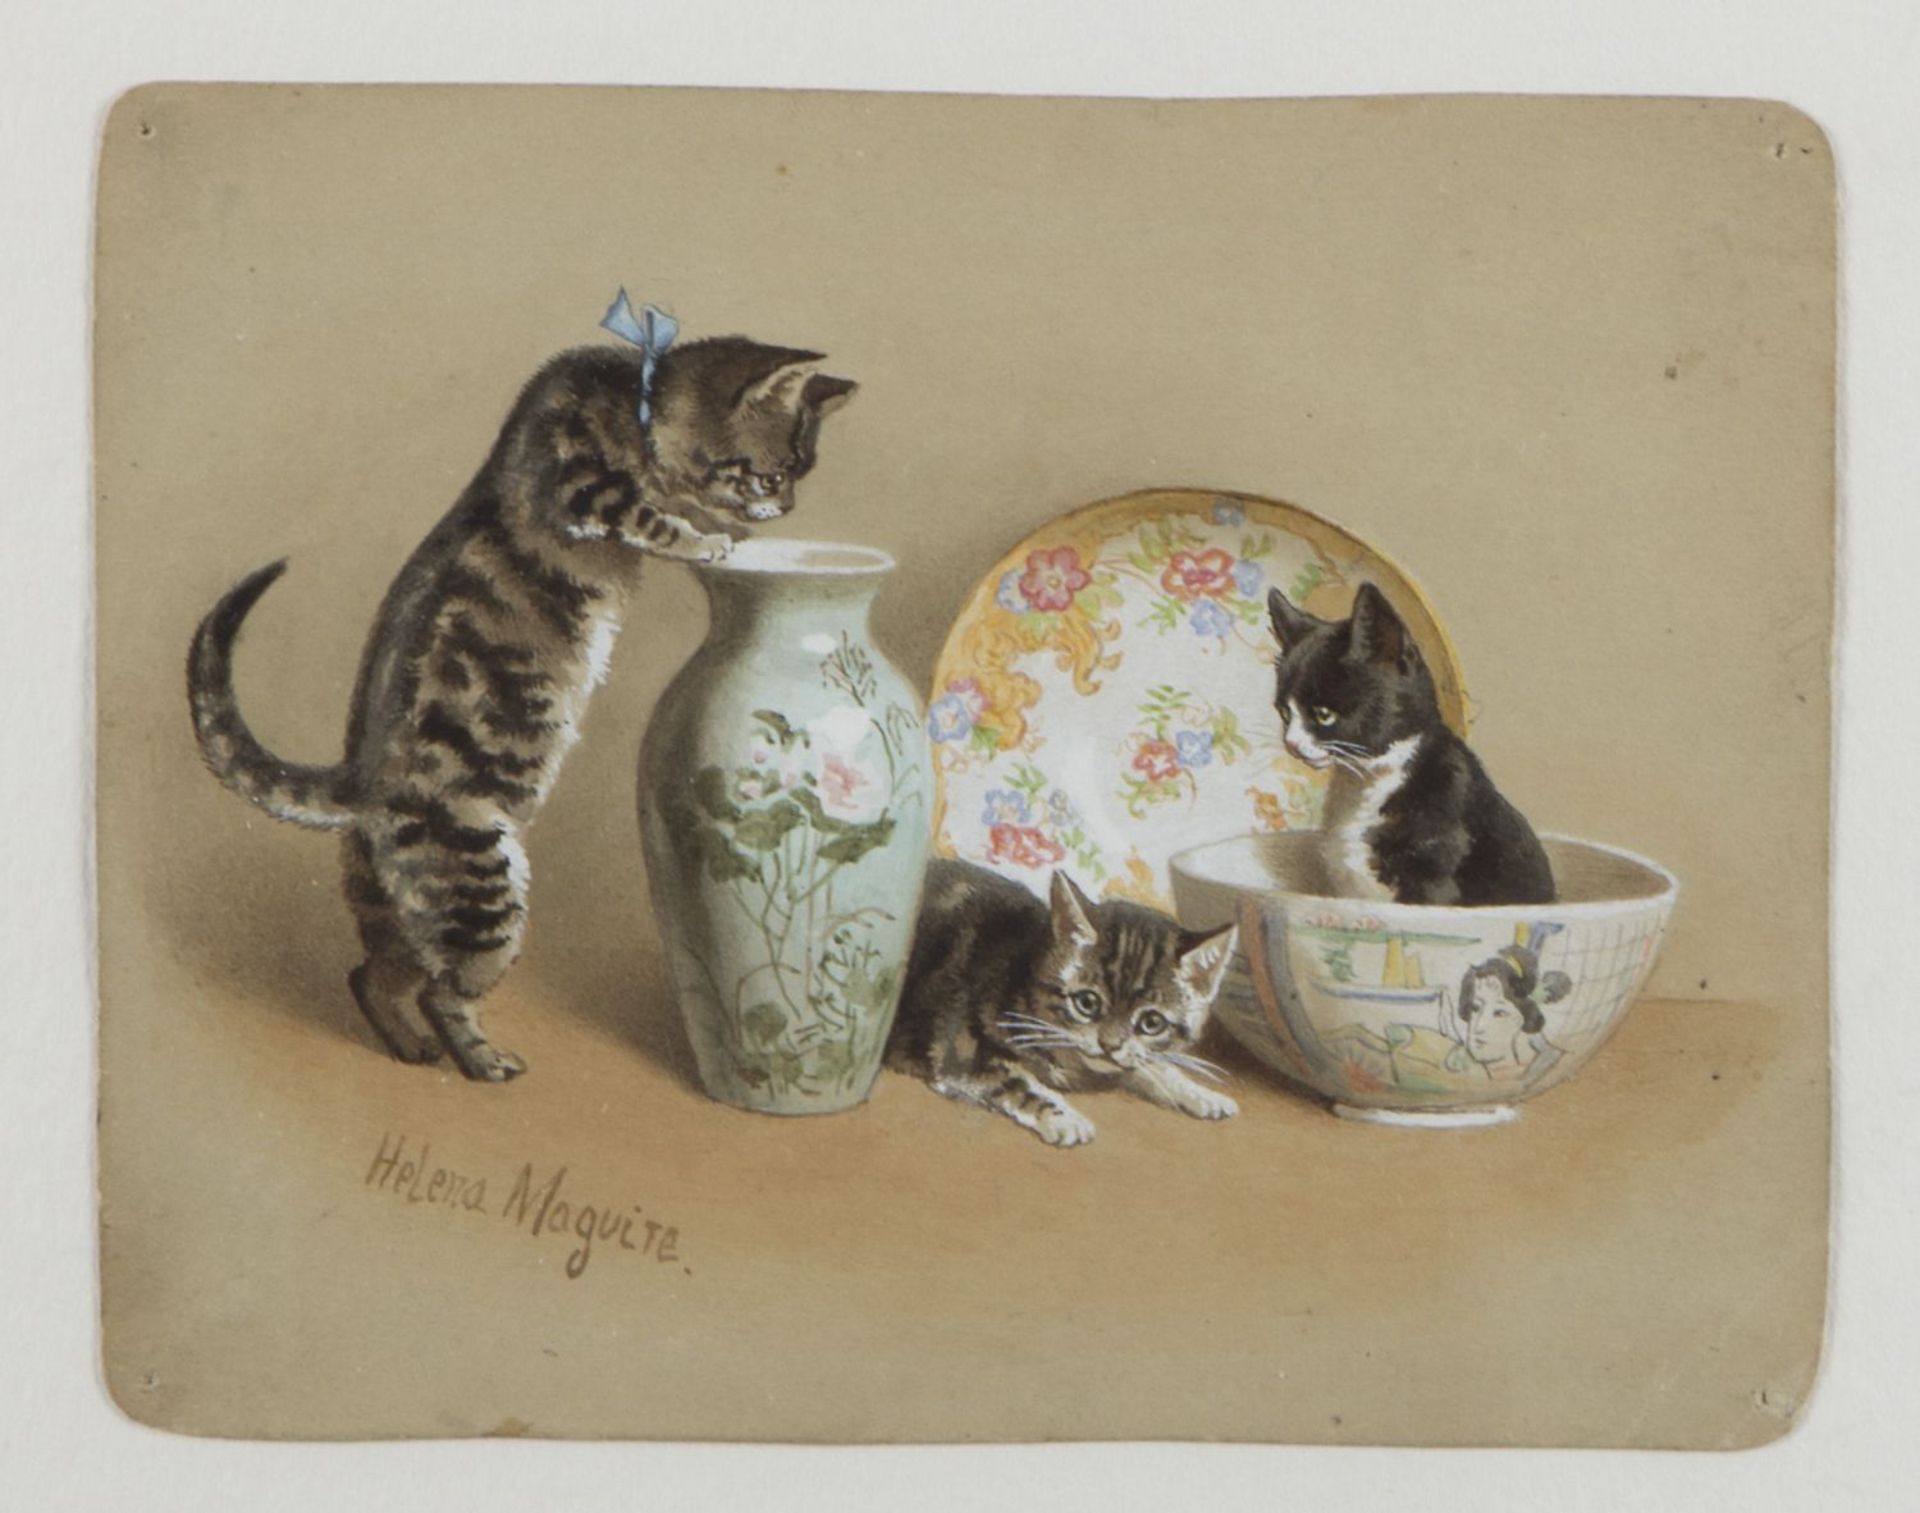 Maguire, Helena J. 1860 - 1909 Spielende Katzen mit Porzellan. Spielende Katzen in Eimern. 2 Gouach - Image 2 of 3